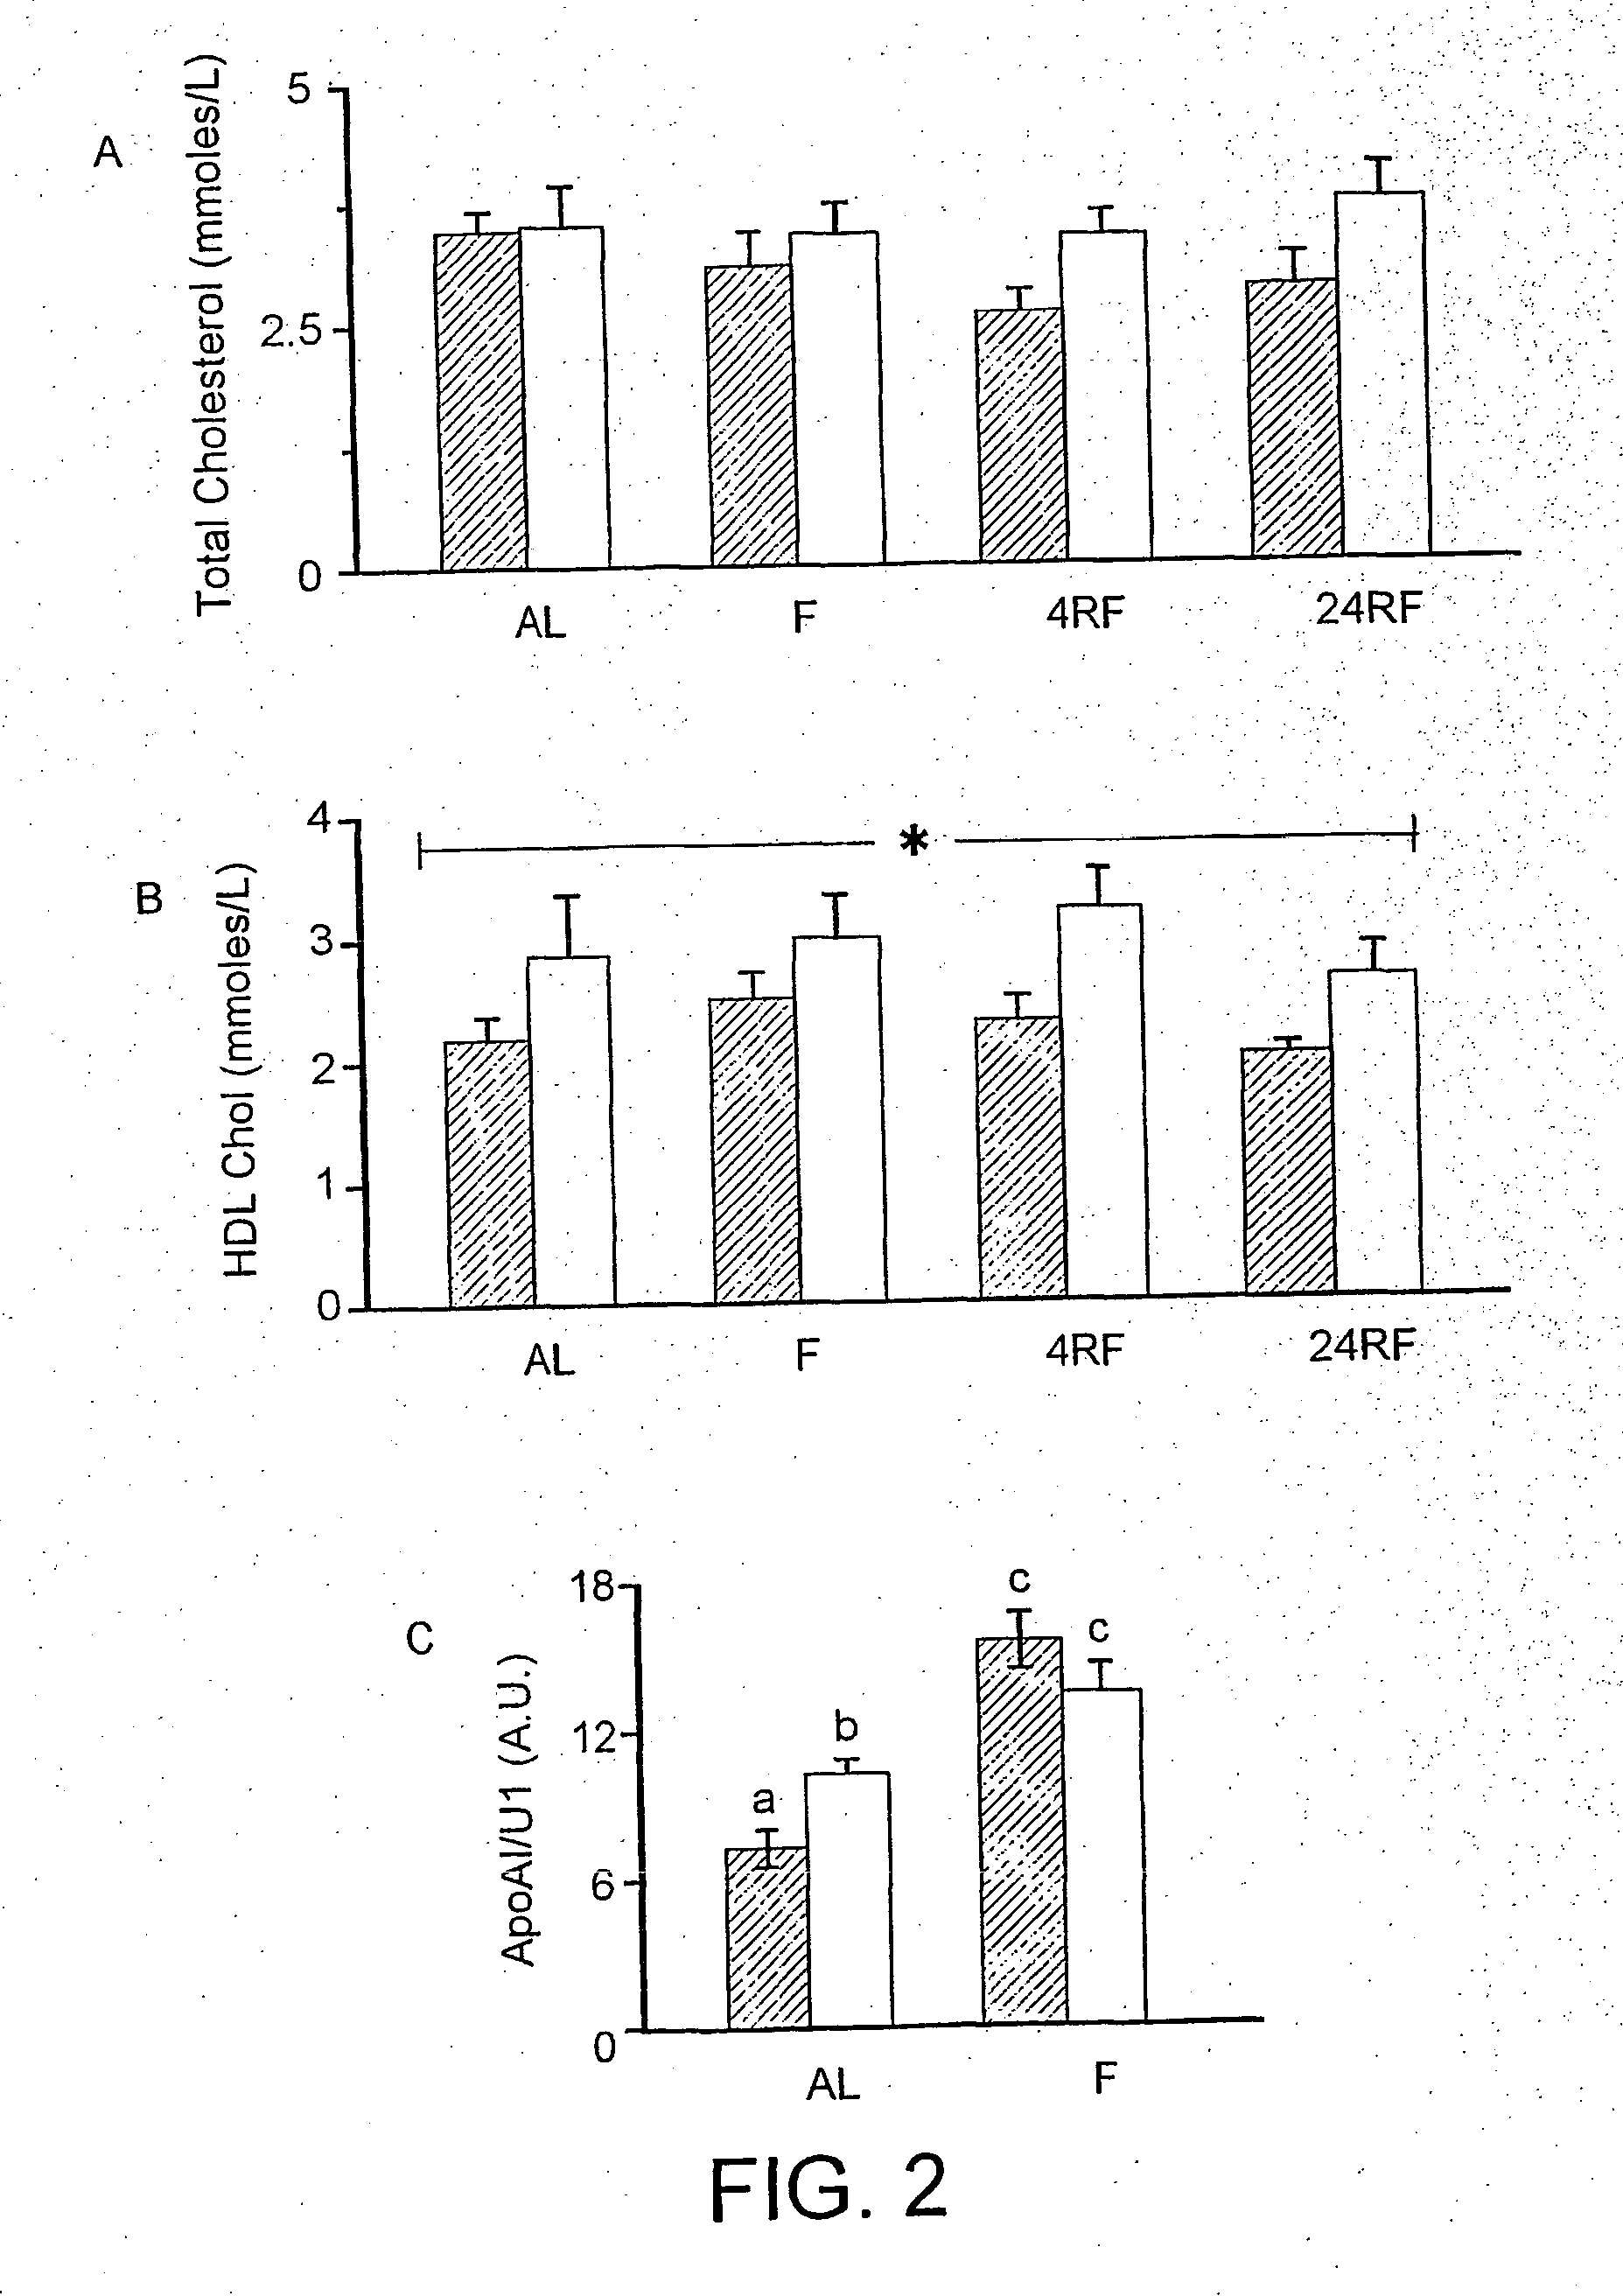 Lipid profile modulation